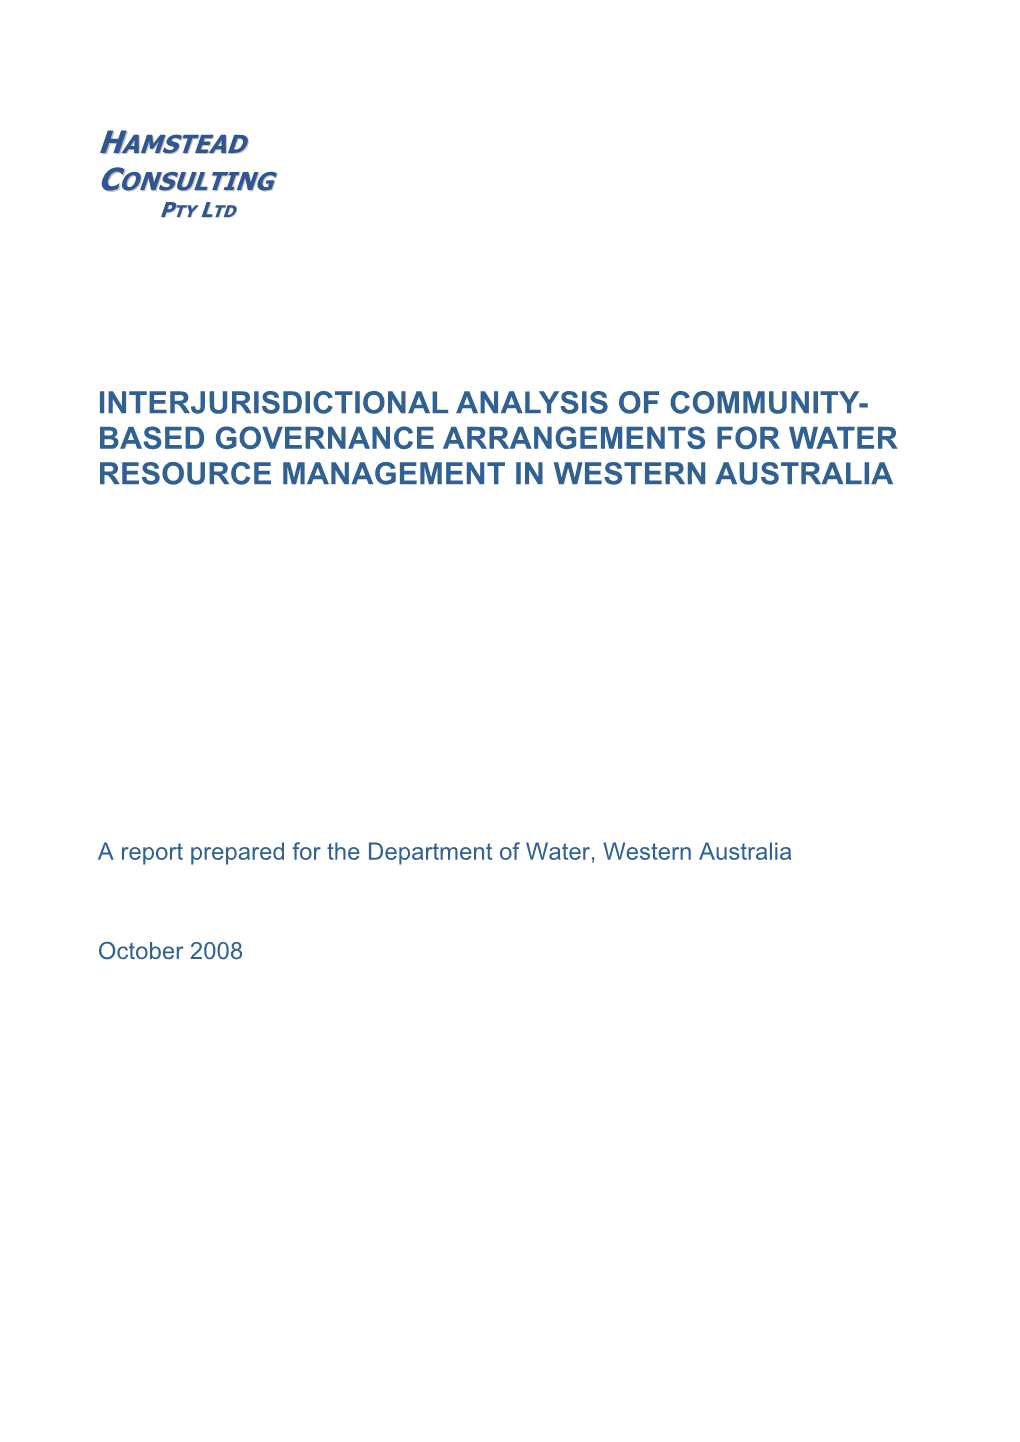 Based Governance Arrangements for Water Resource Management in Western Australia